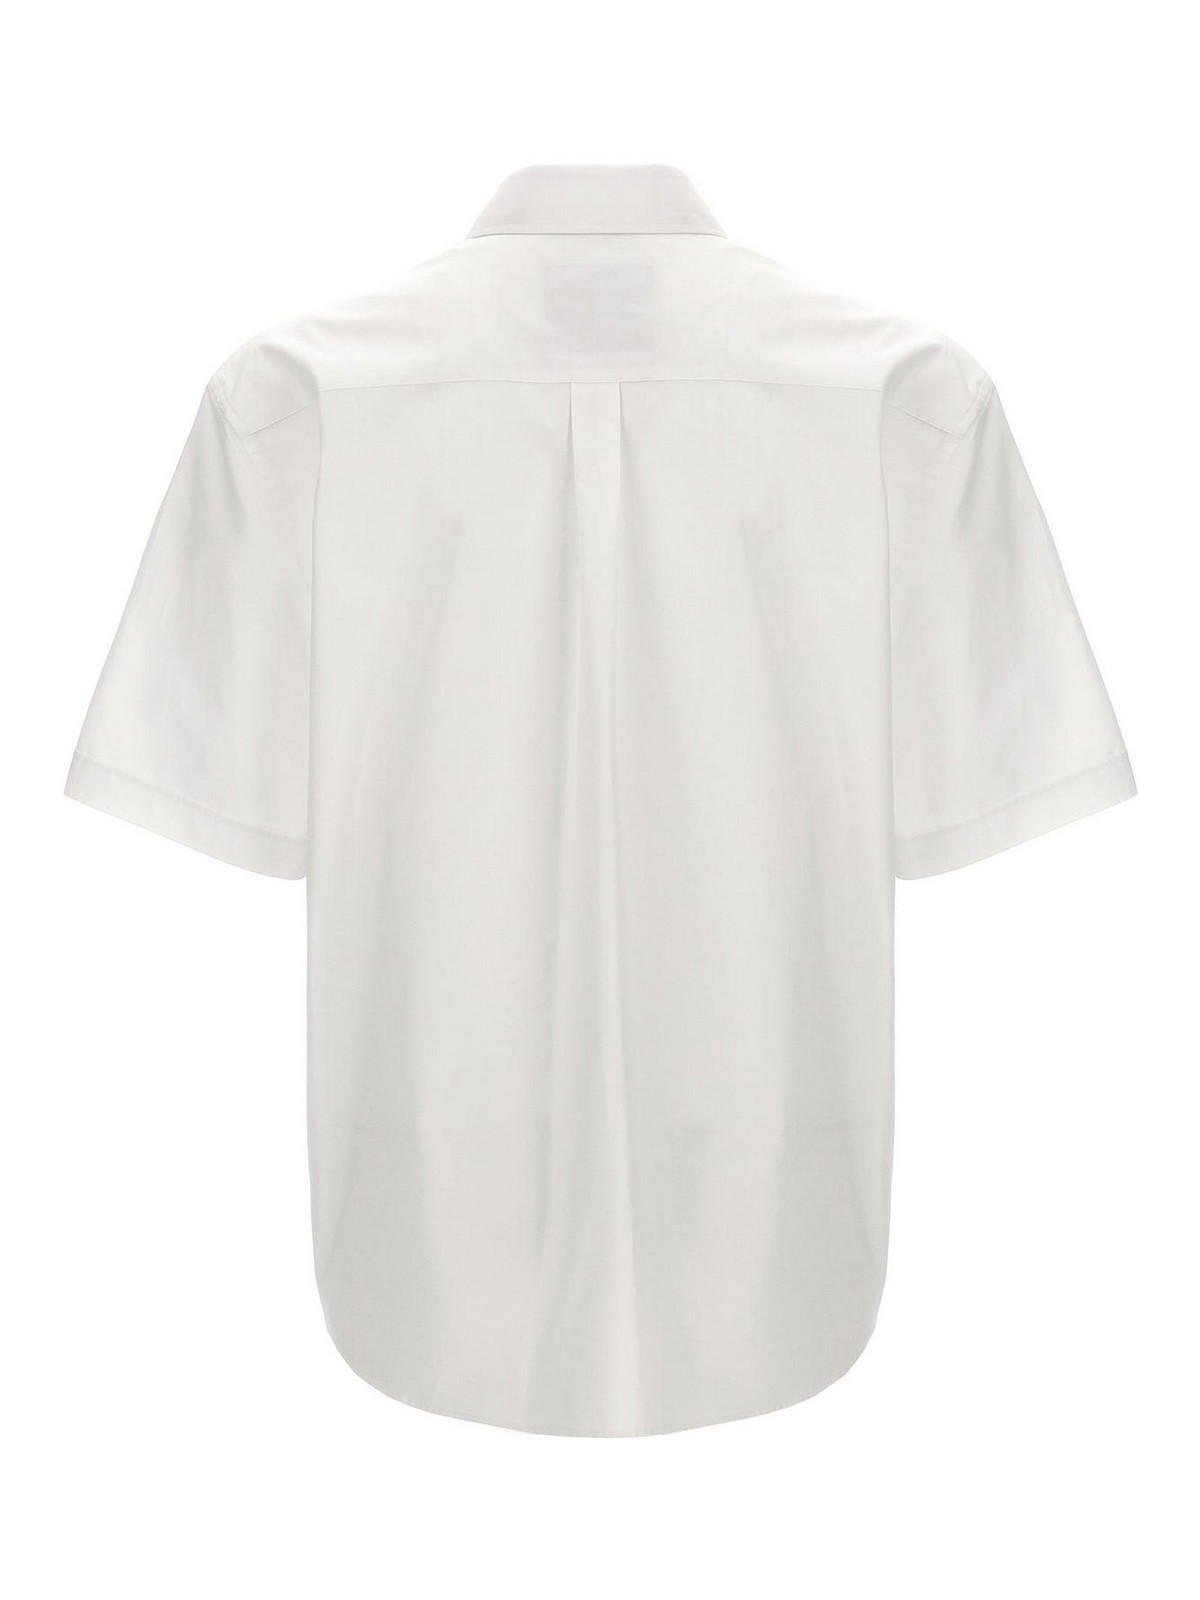 Shop Moschino In Love We Trust Shirt In Blanco